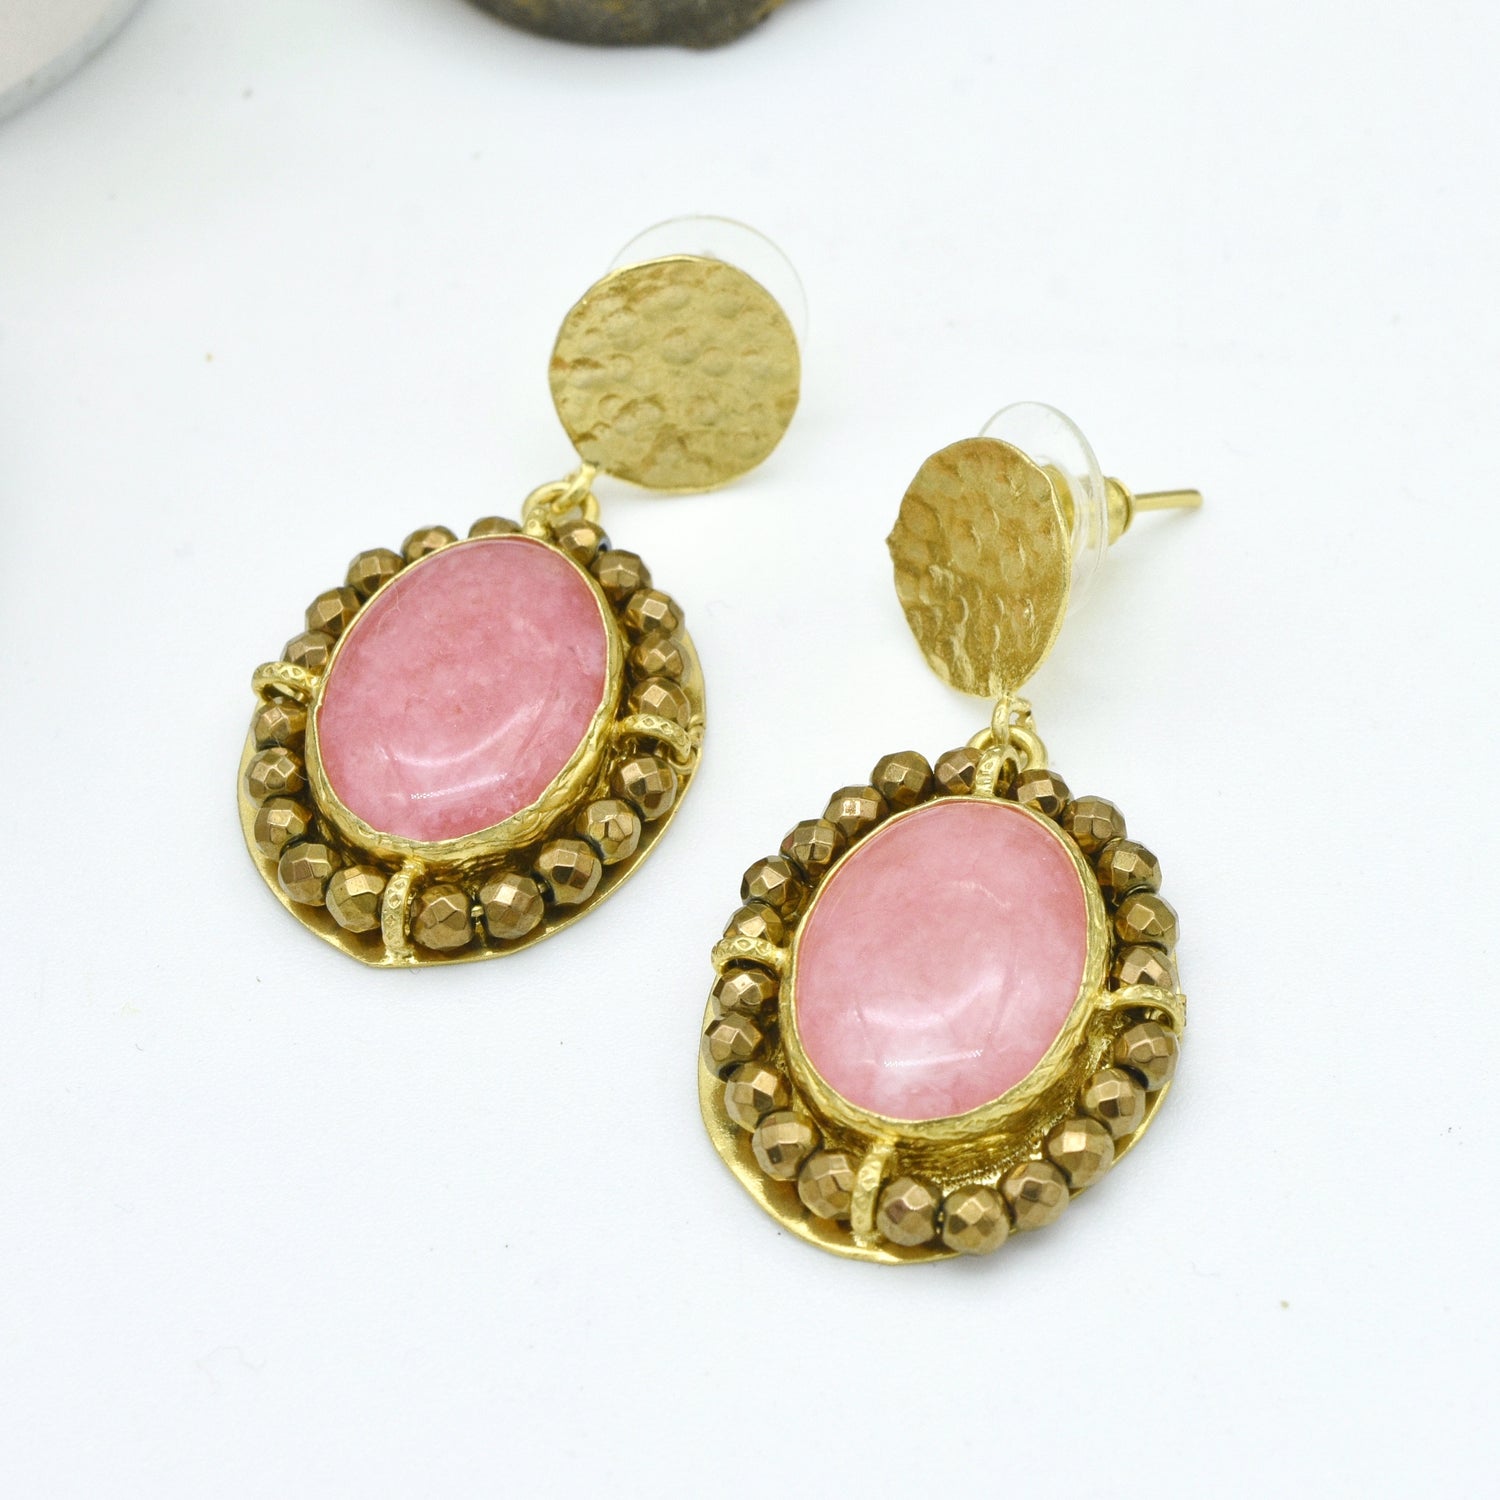 Aylas Hemitite, Agate semi precious gemstone earrings - 21ct Gold plated Handmade